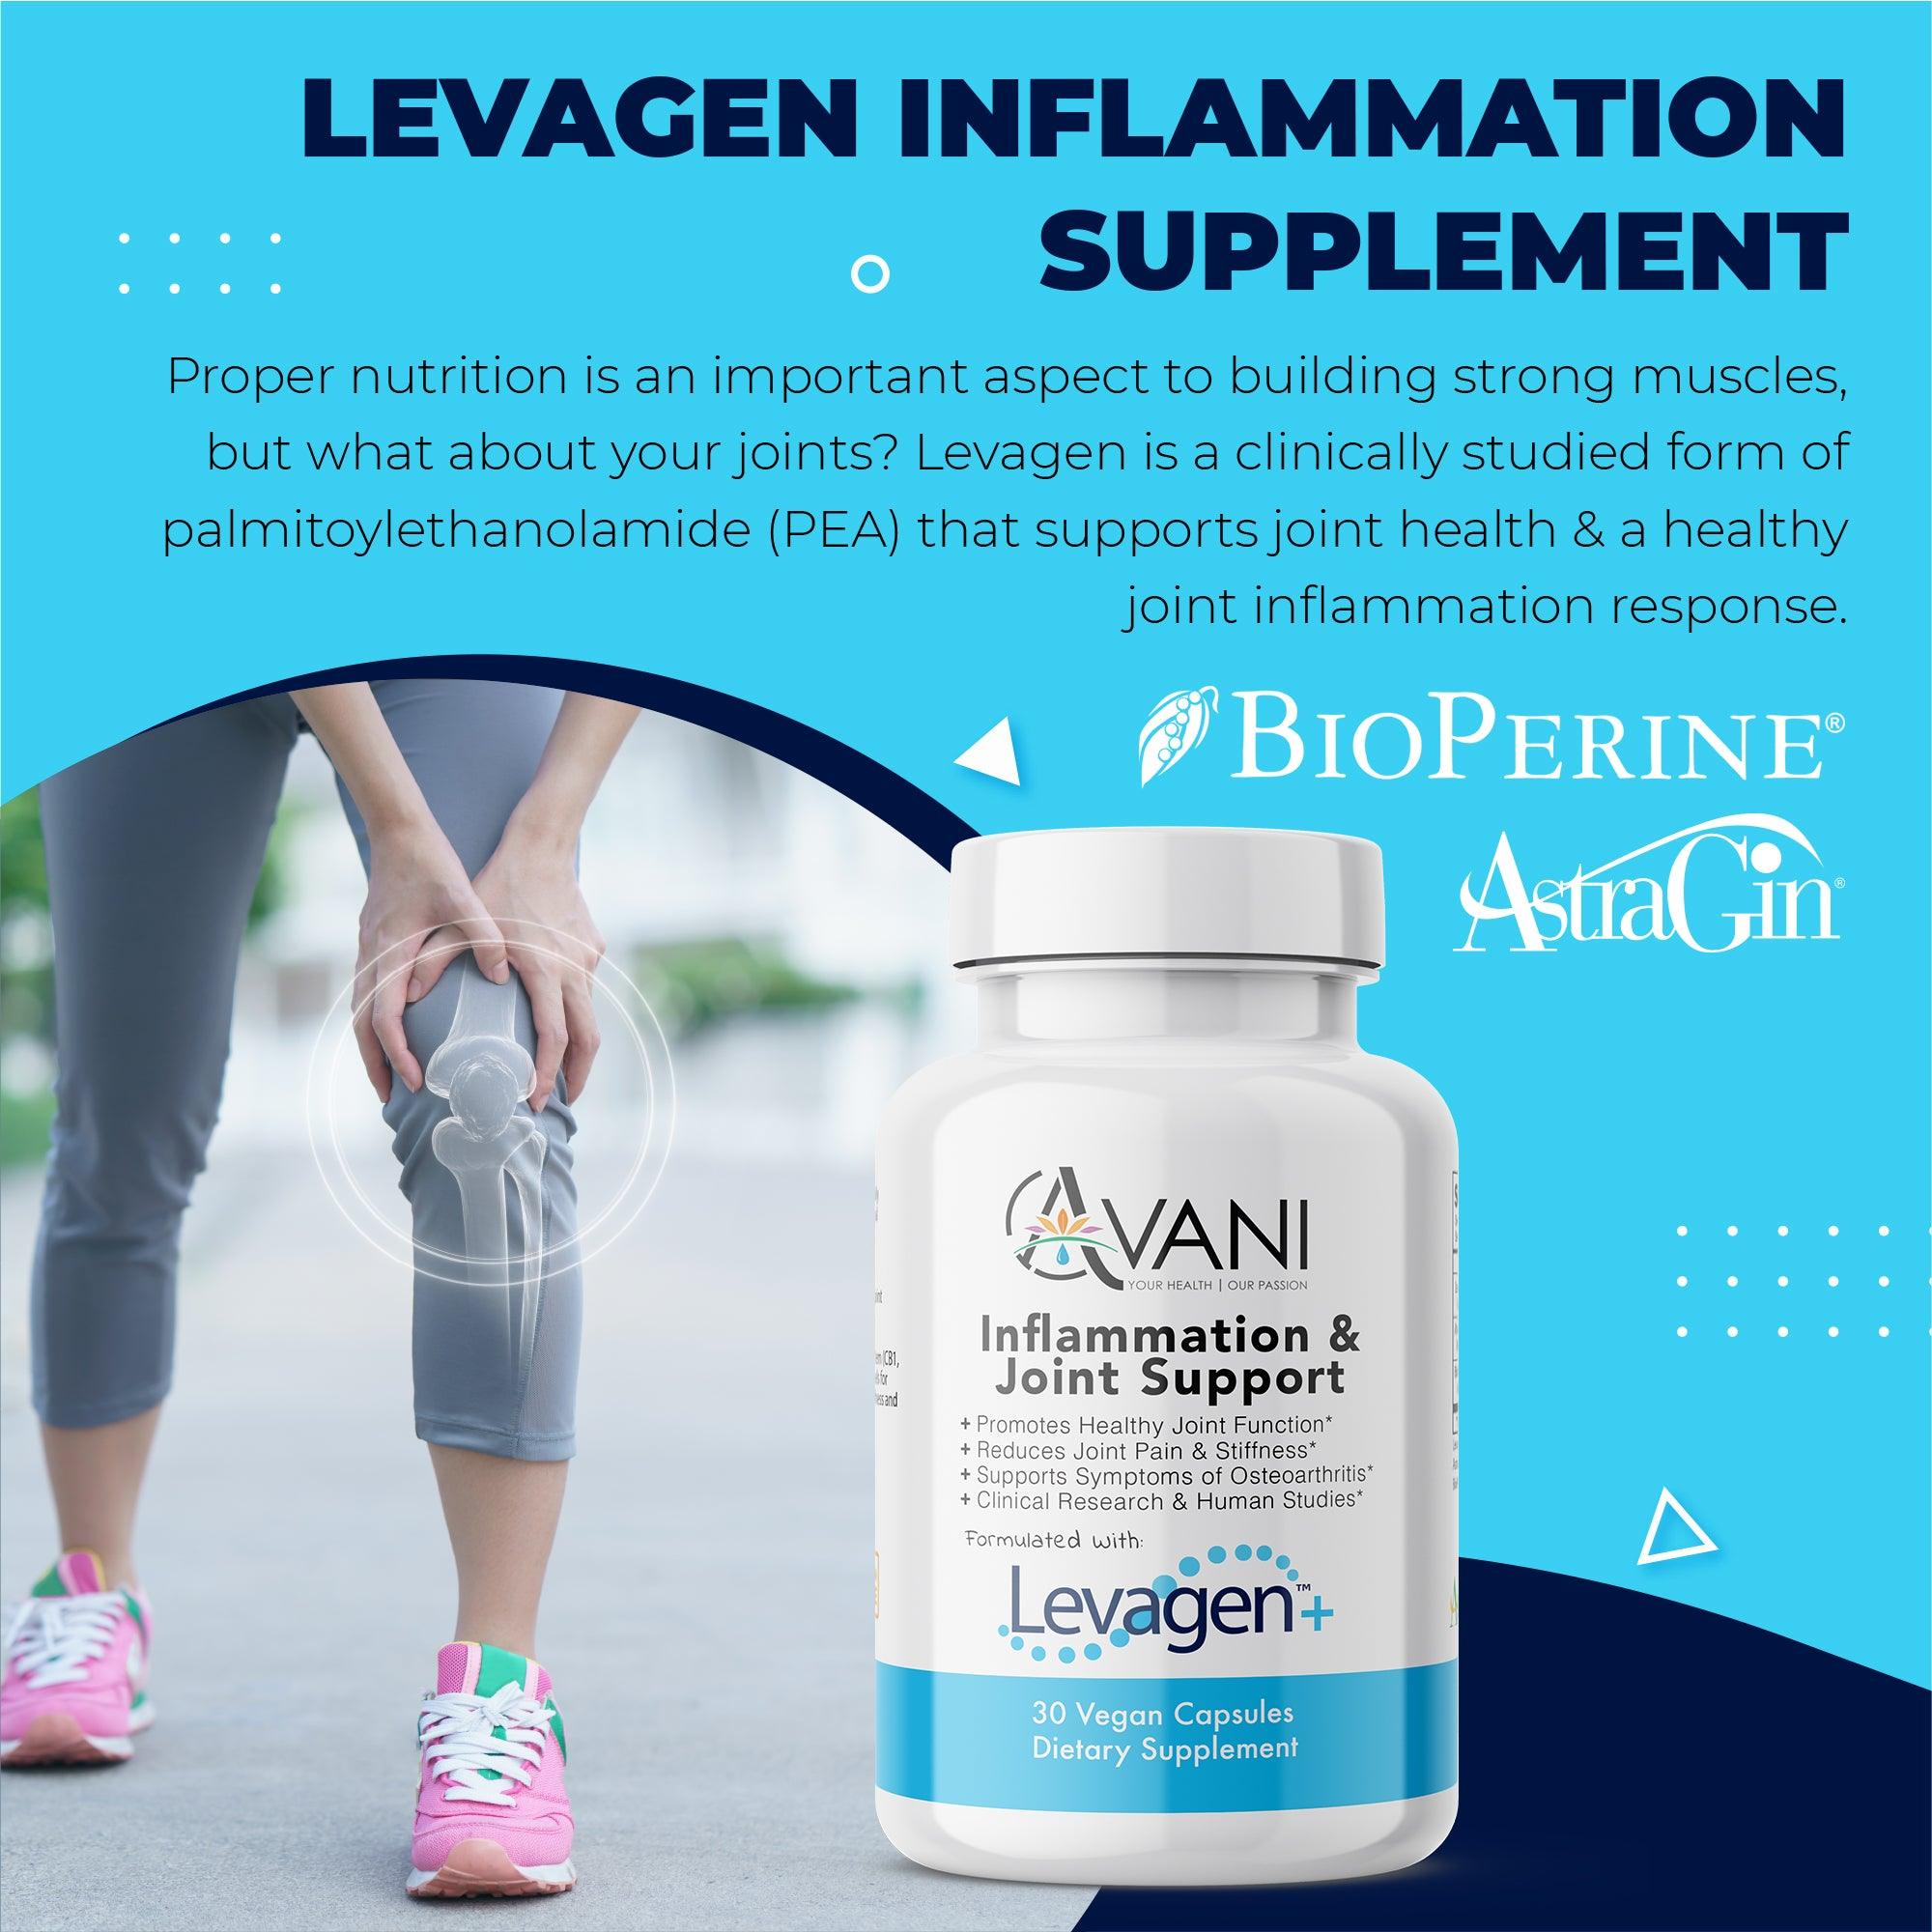 Levagen+® Inflammation + Joint Support - Avani Wellness